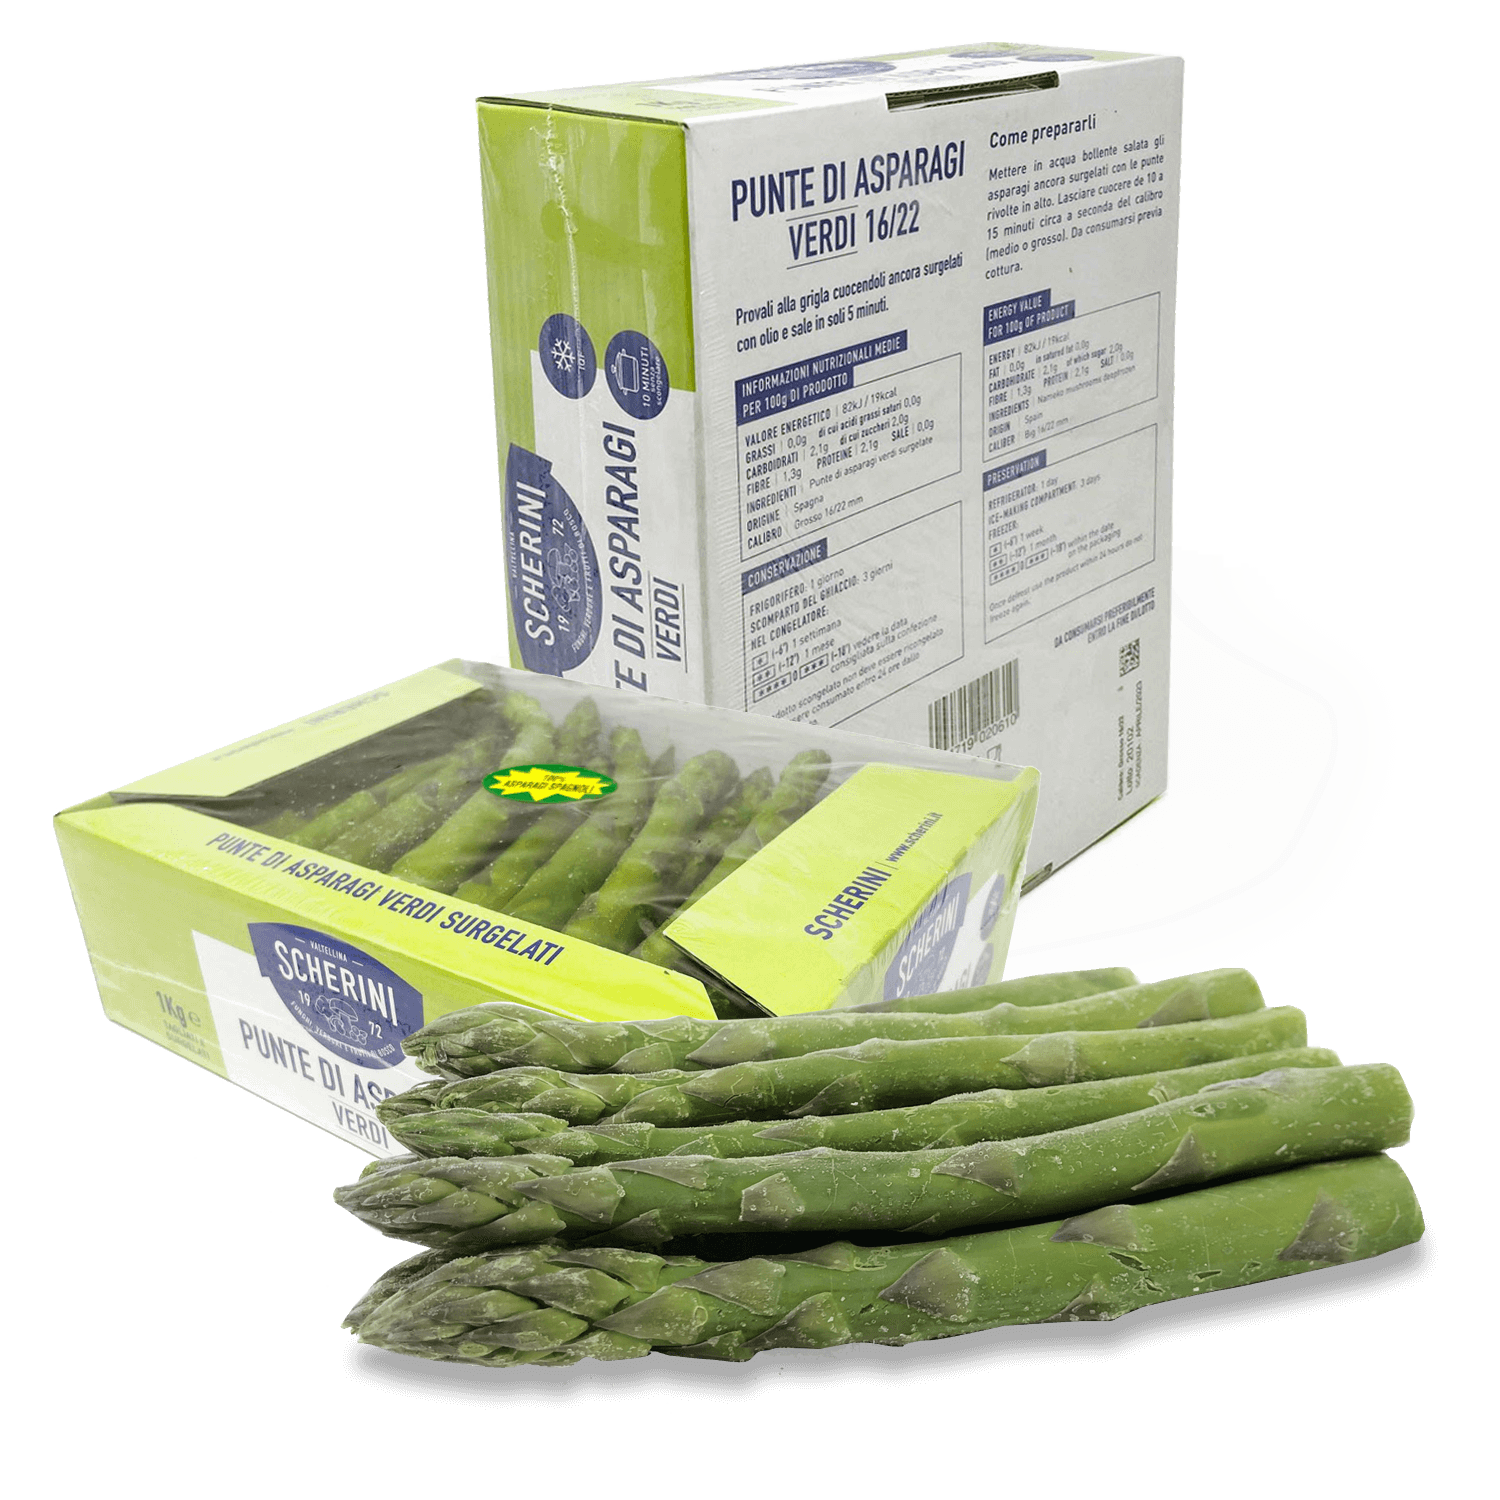 Scherini frozen green asparagus